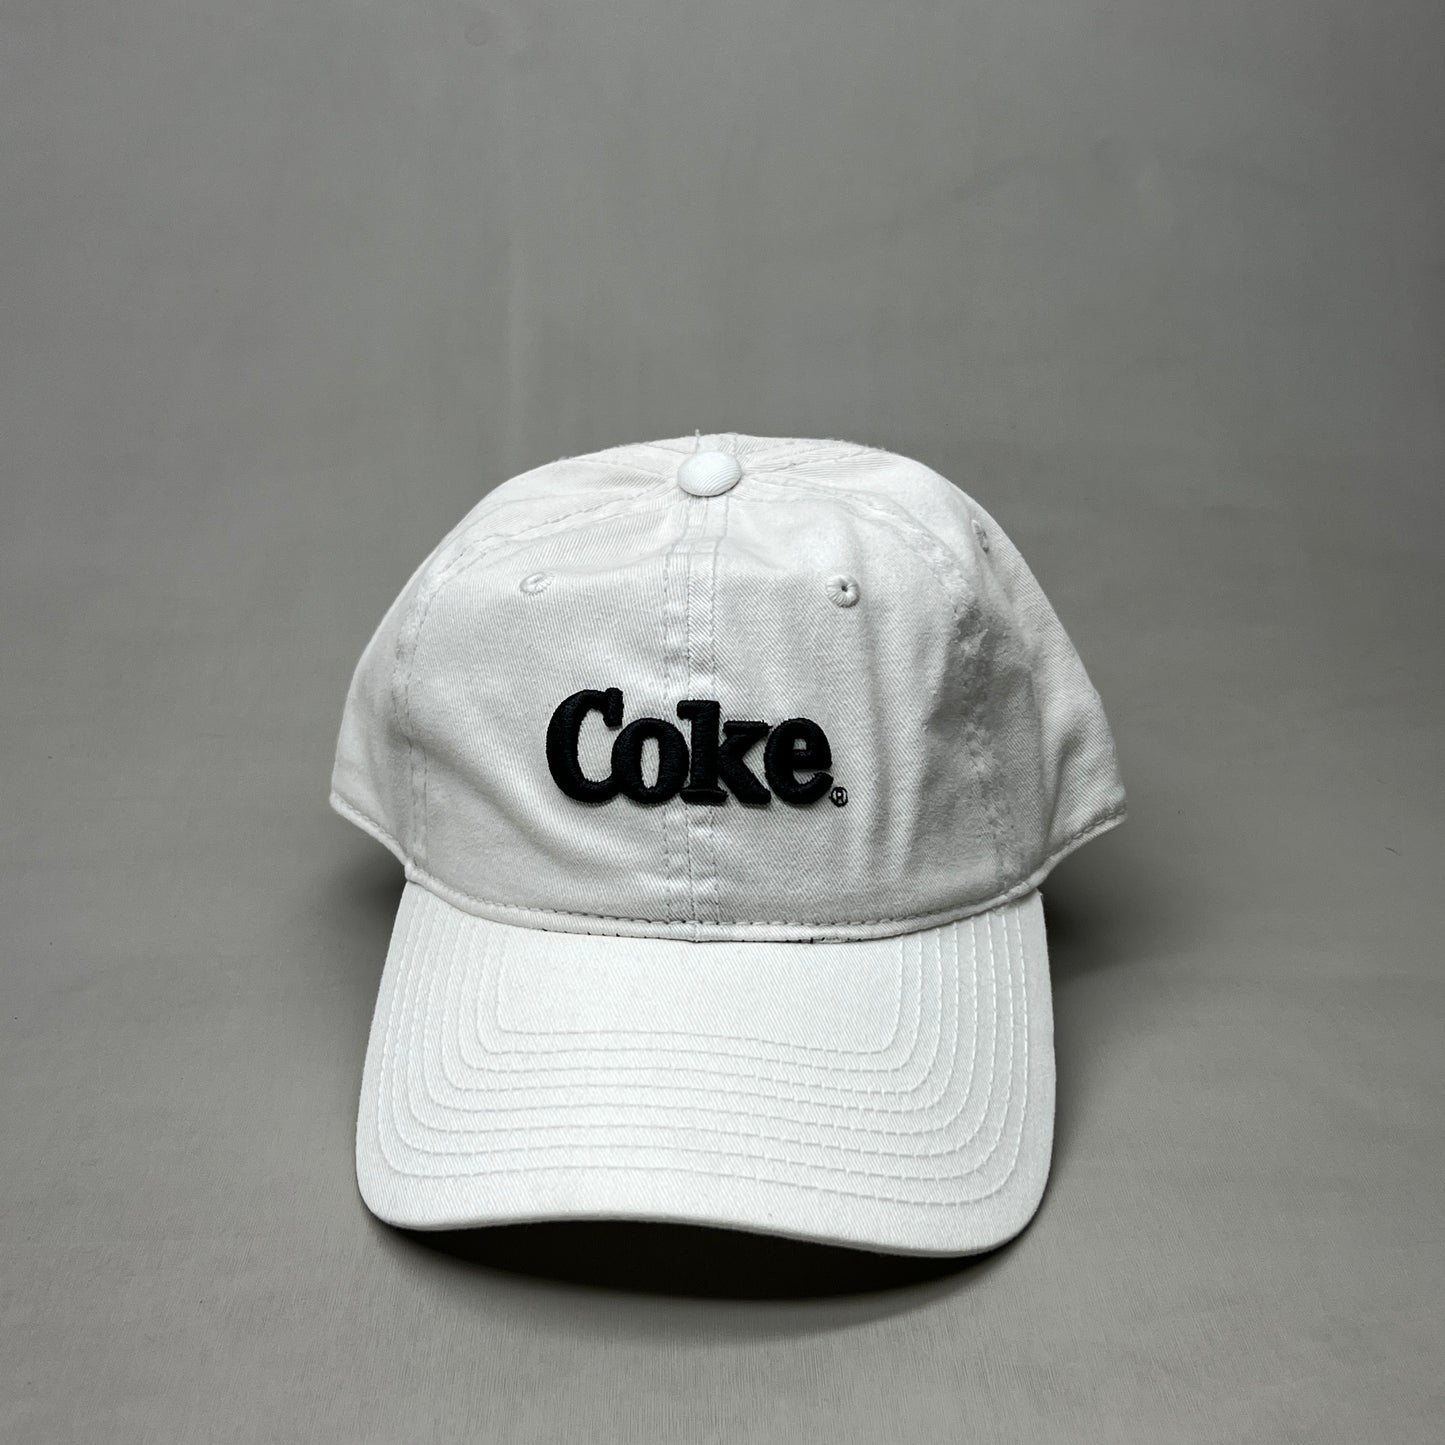 COCA-COLA Baseball Cap Strap Back Sz One Size White 23635 (New)